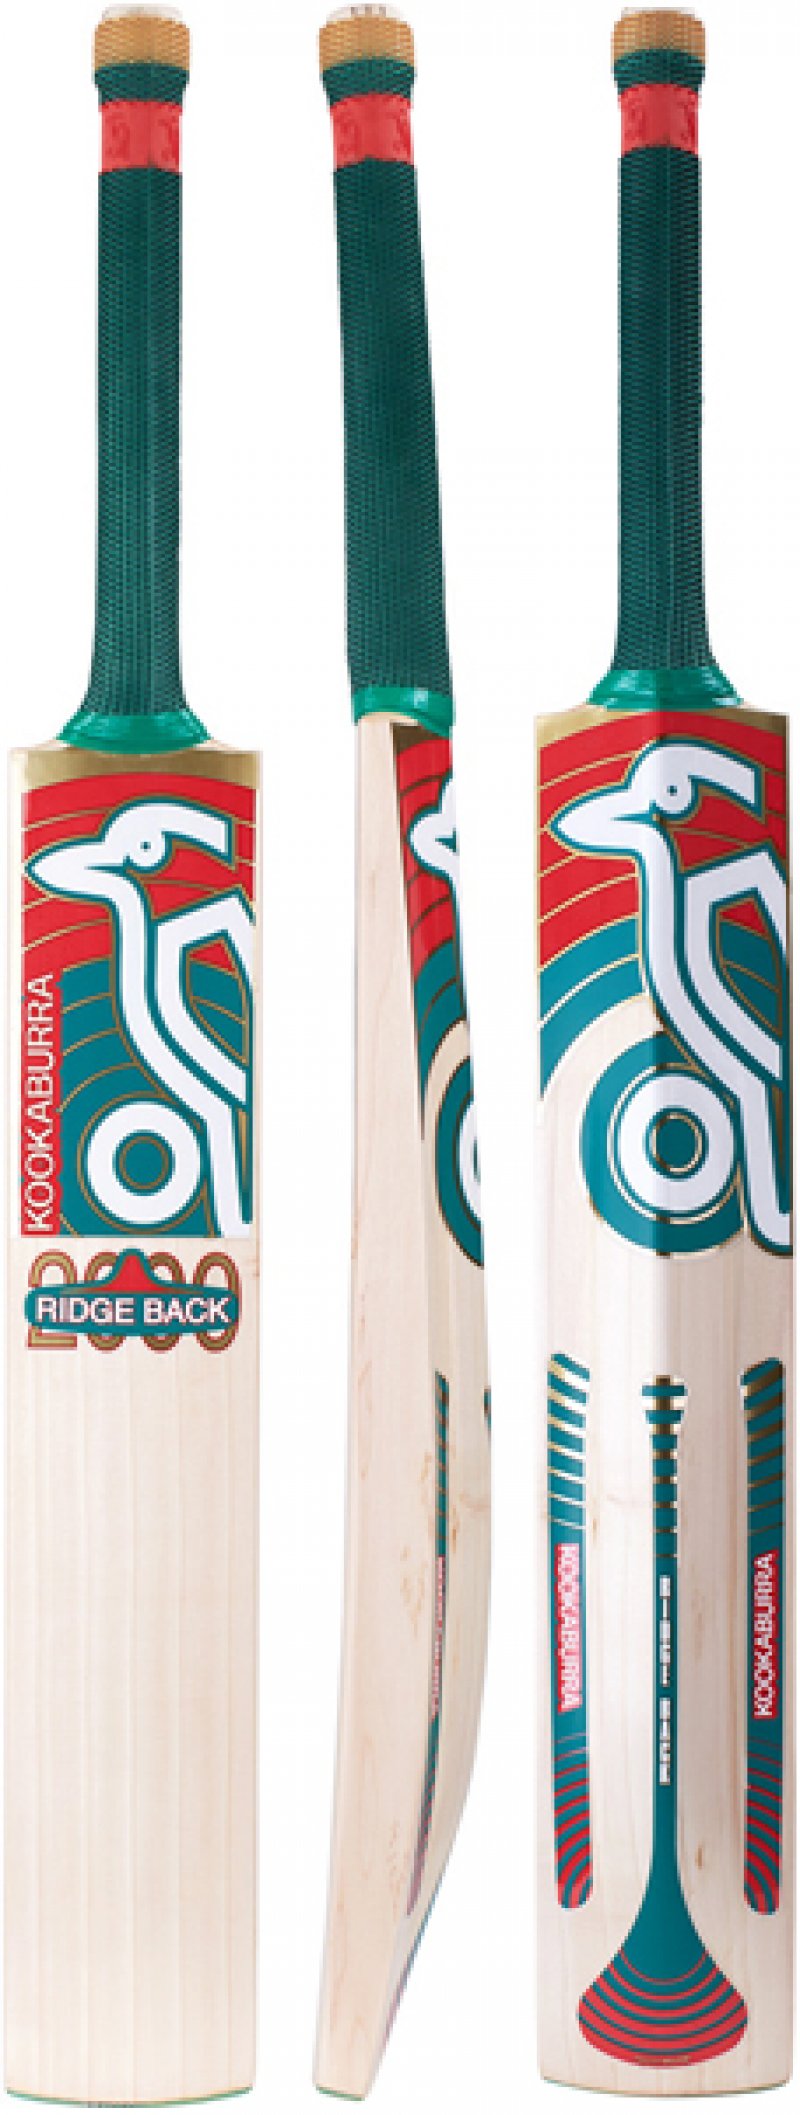 Kookaburra Ridgeback 2000 Cricket Bat